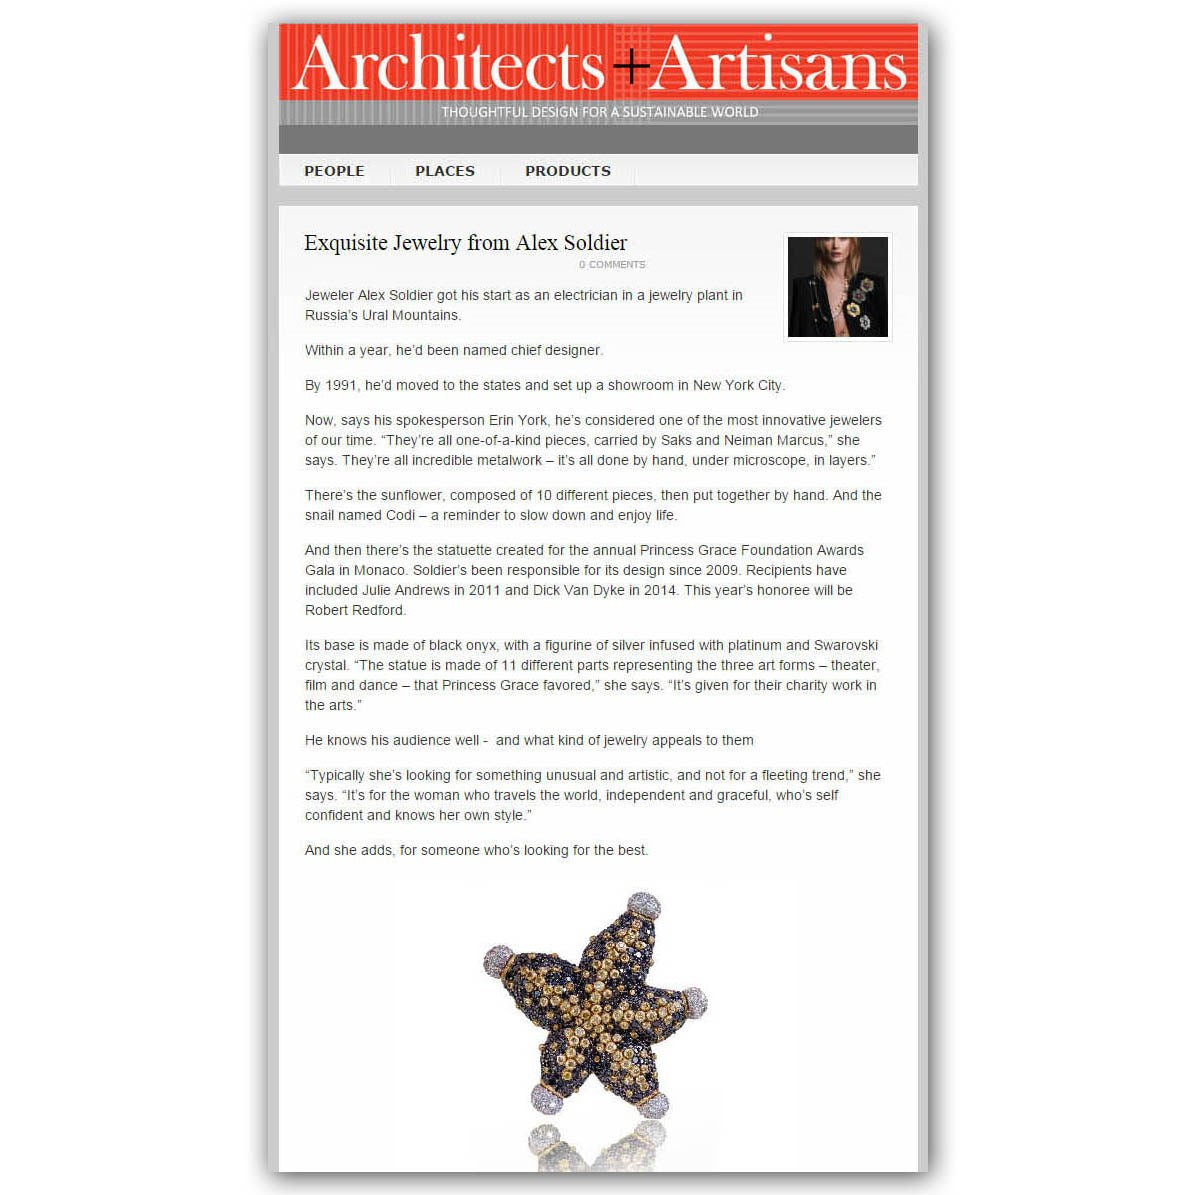 Architects + Artisans